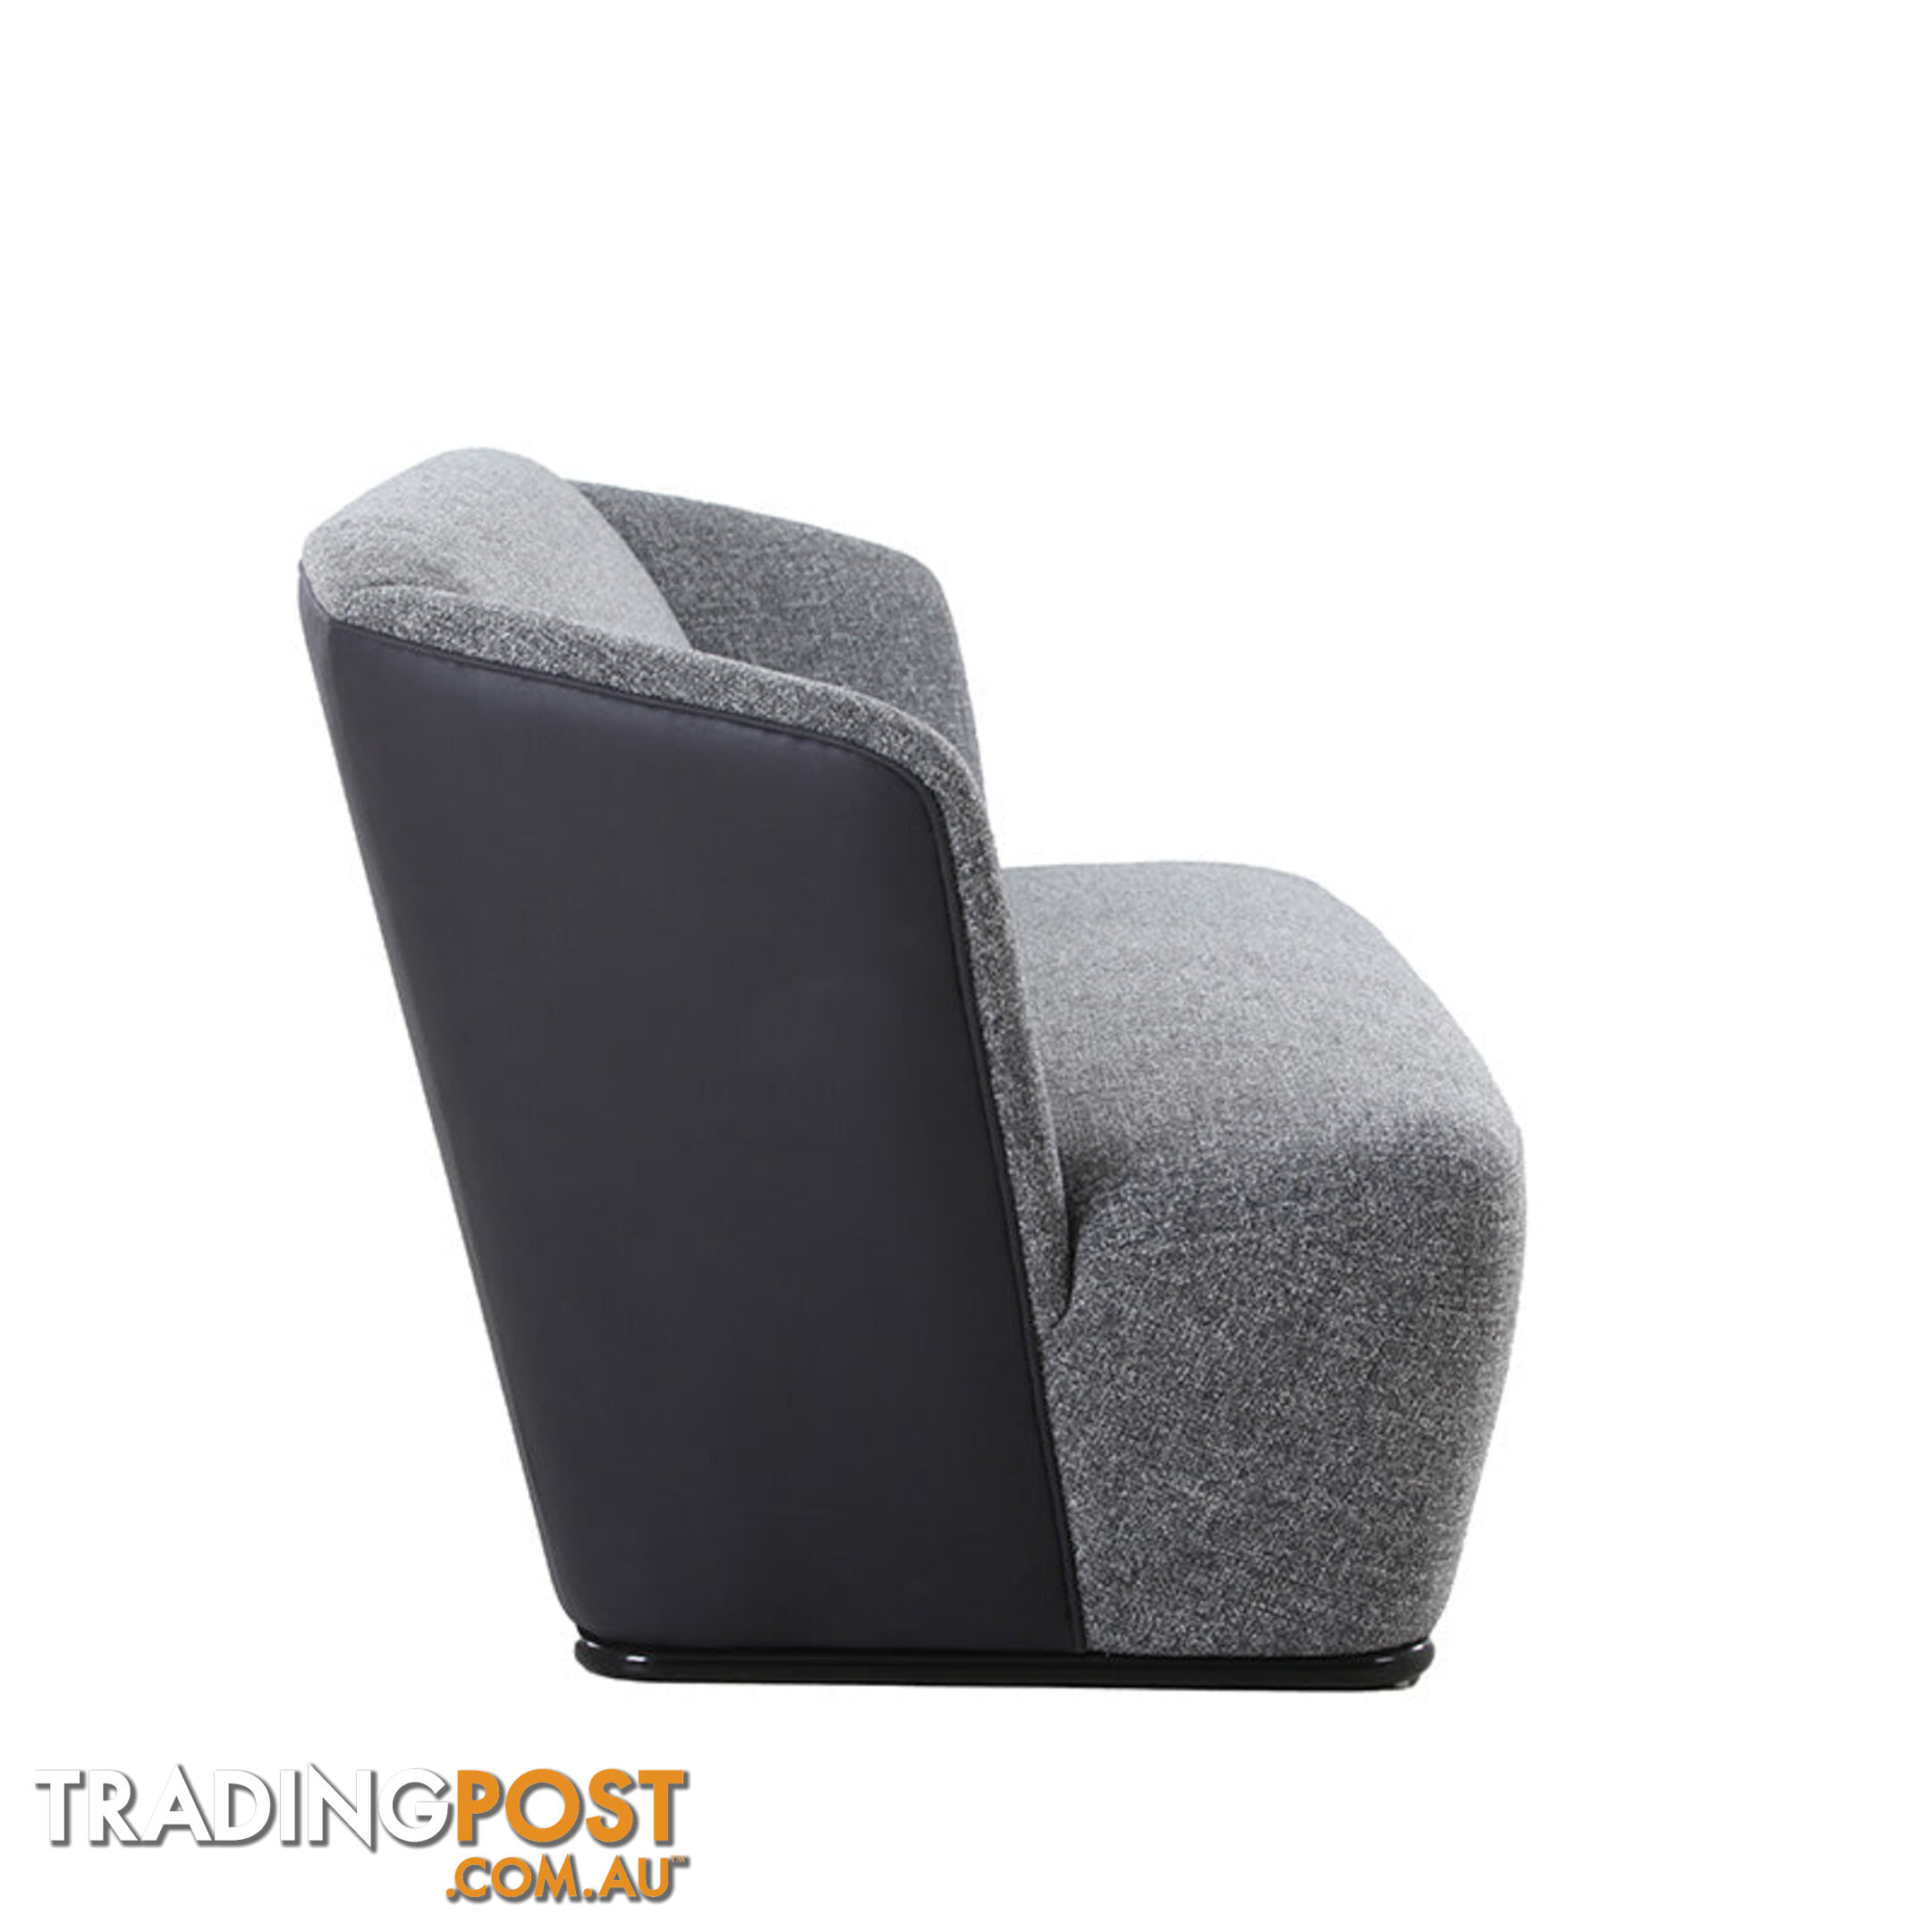 ASTRID 3 Seater Sofa - Grey - DI-NC4005 - 9334719011806